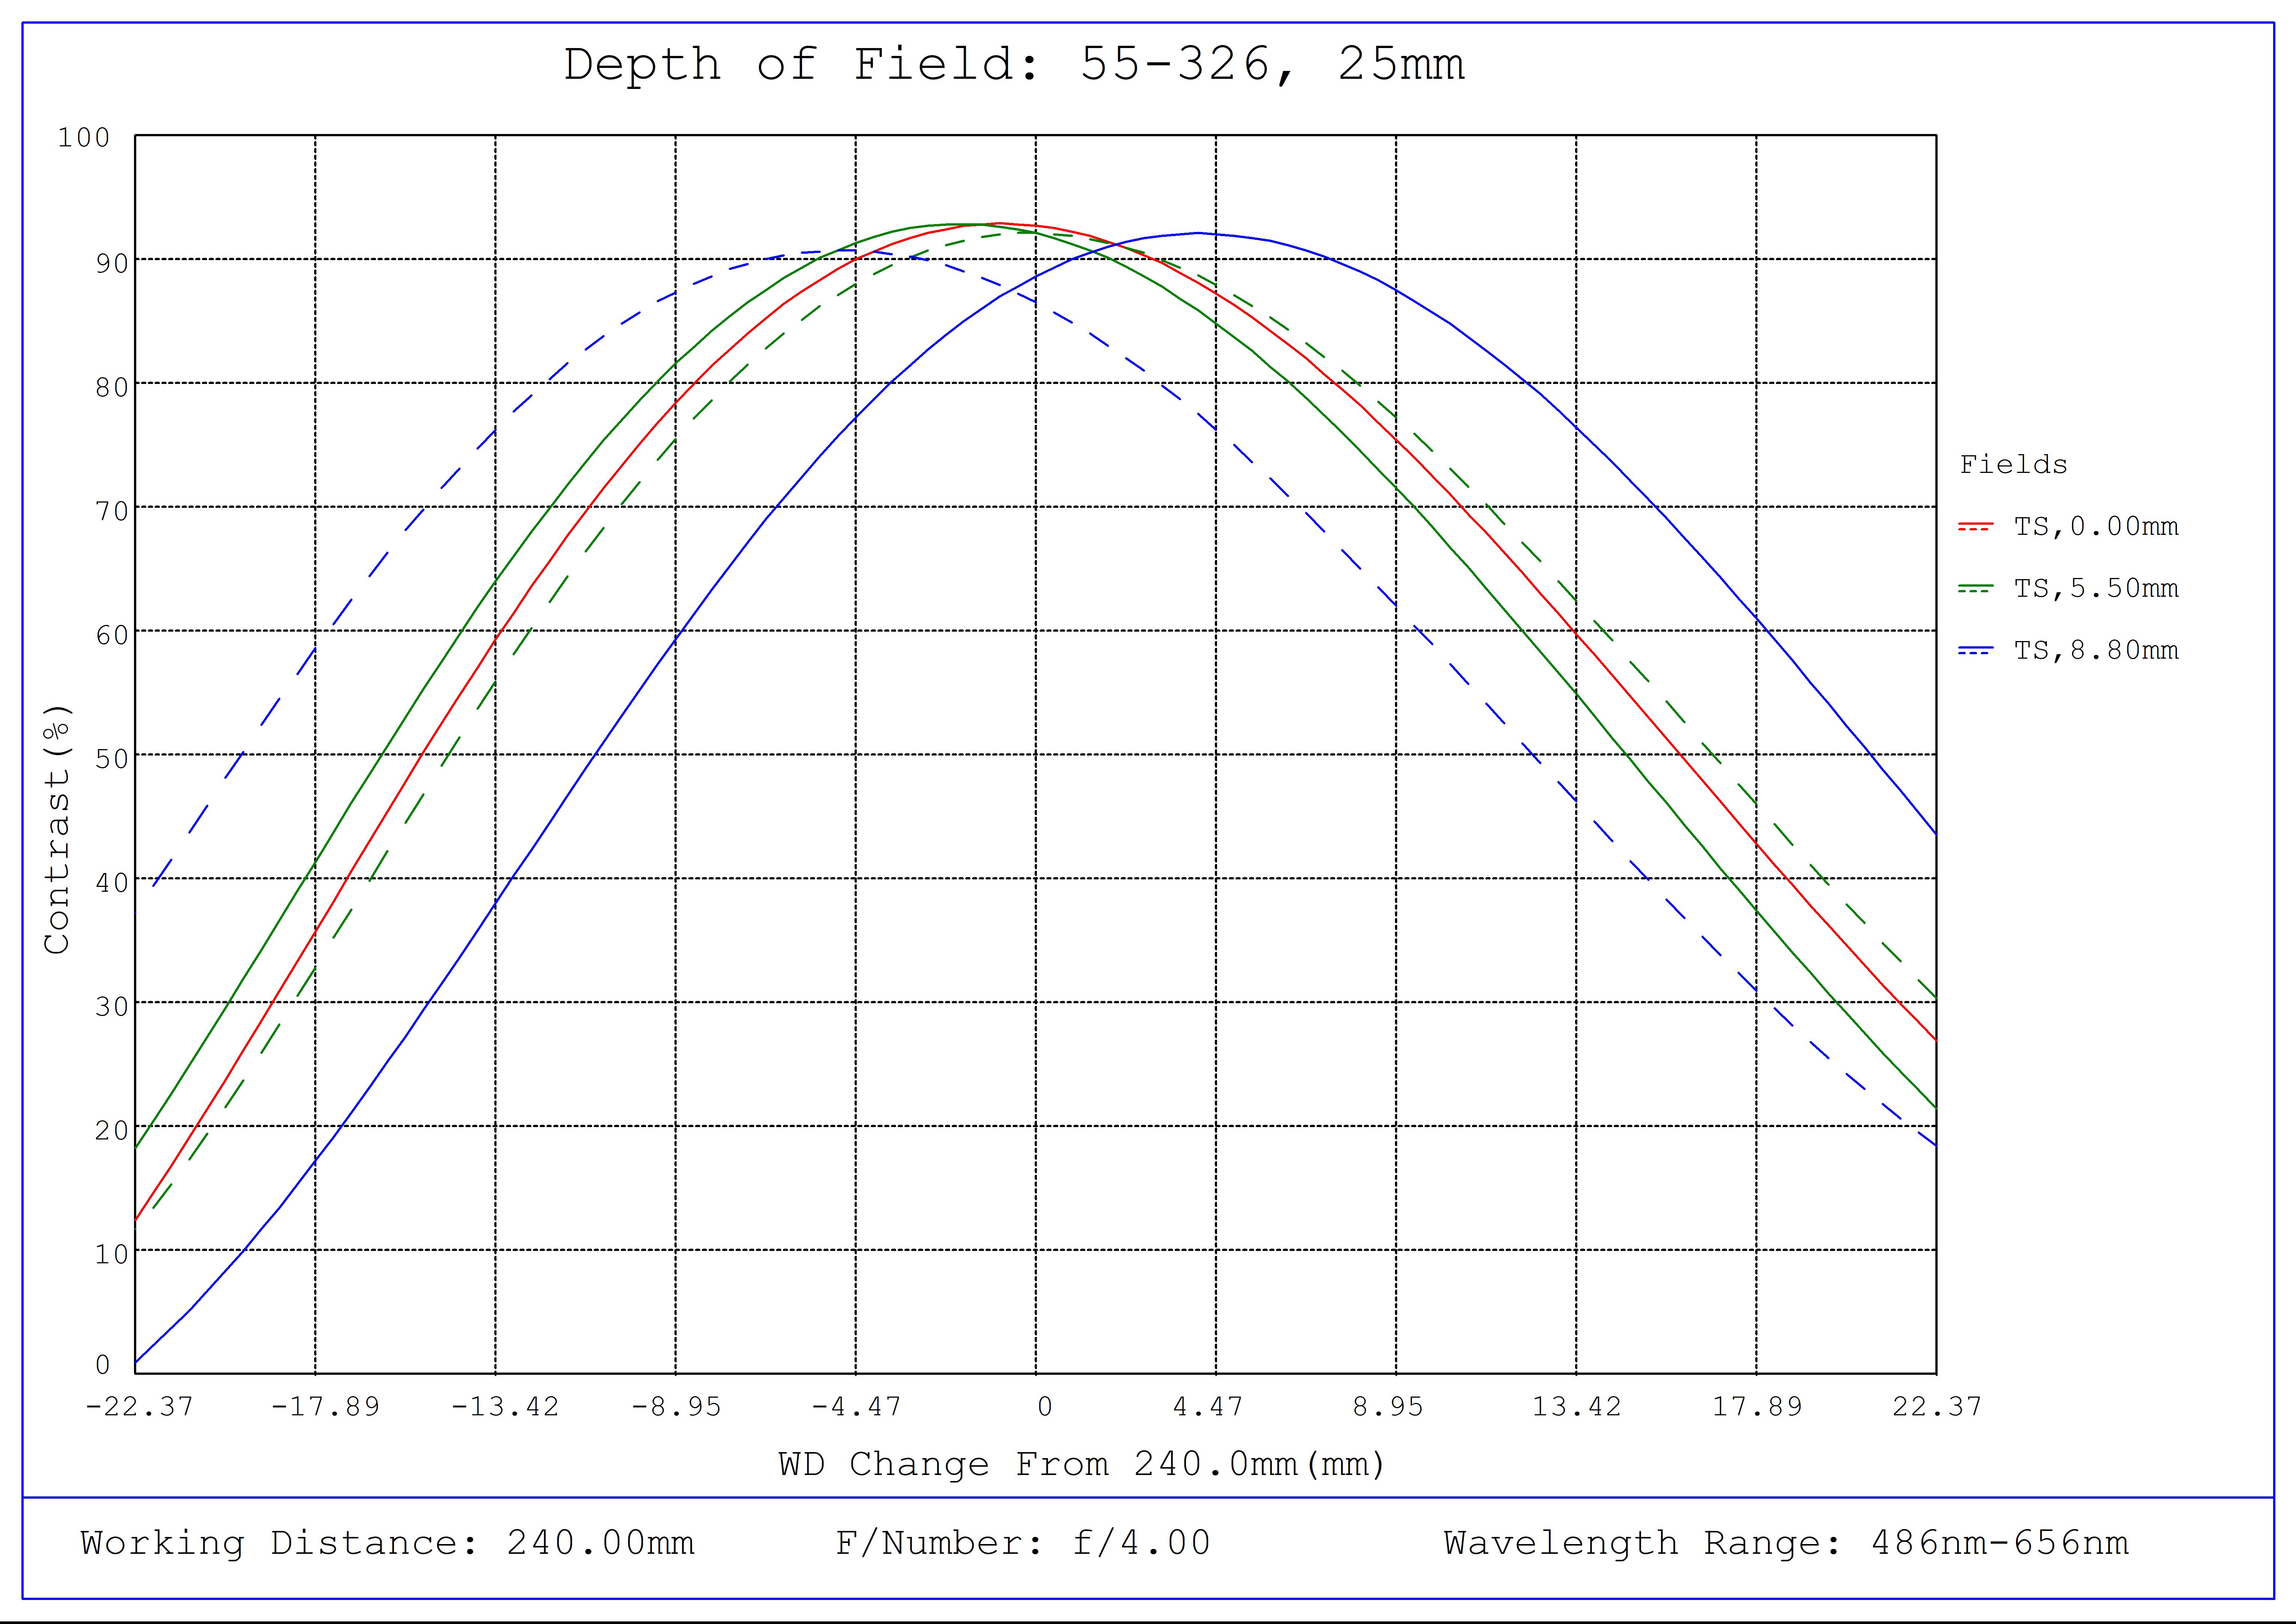 #55-326, 25mm DG Series Fixed Focal Length Lens, Depth of Field Plot, 240mm Working Distance, f4